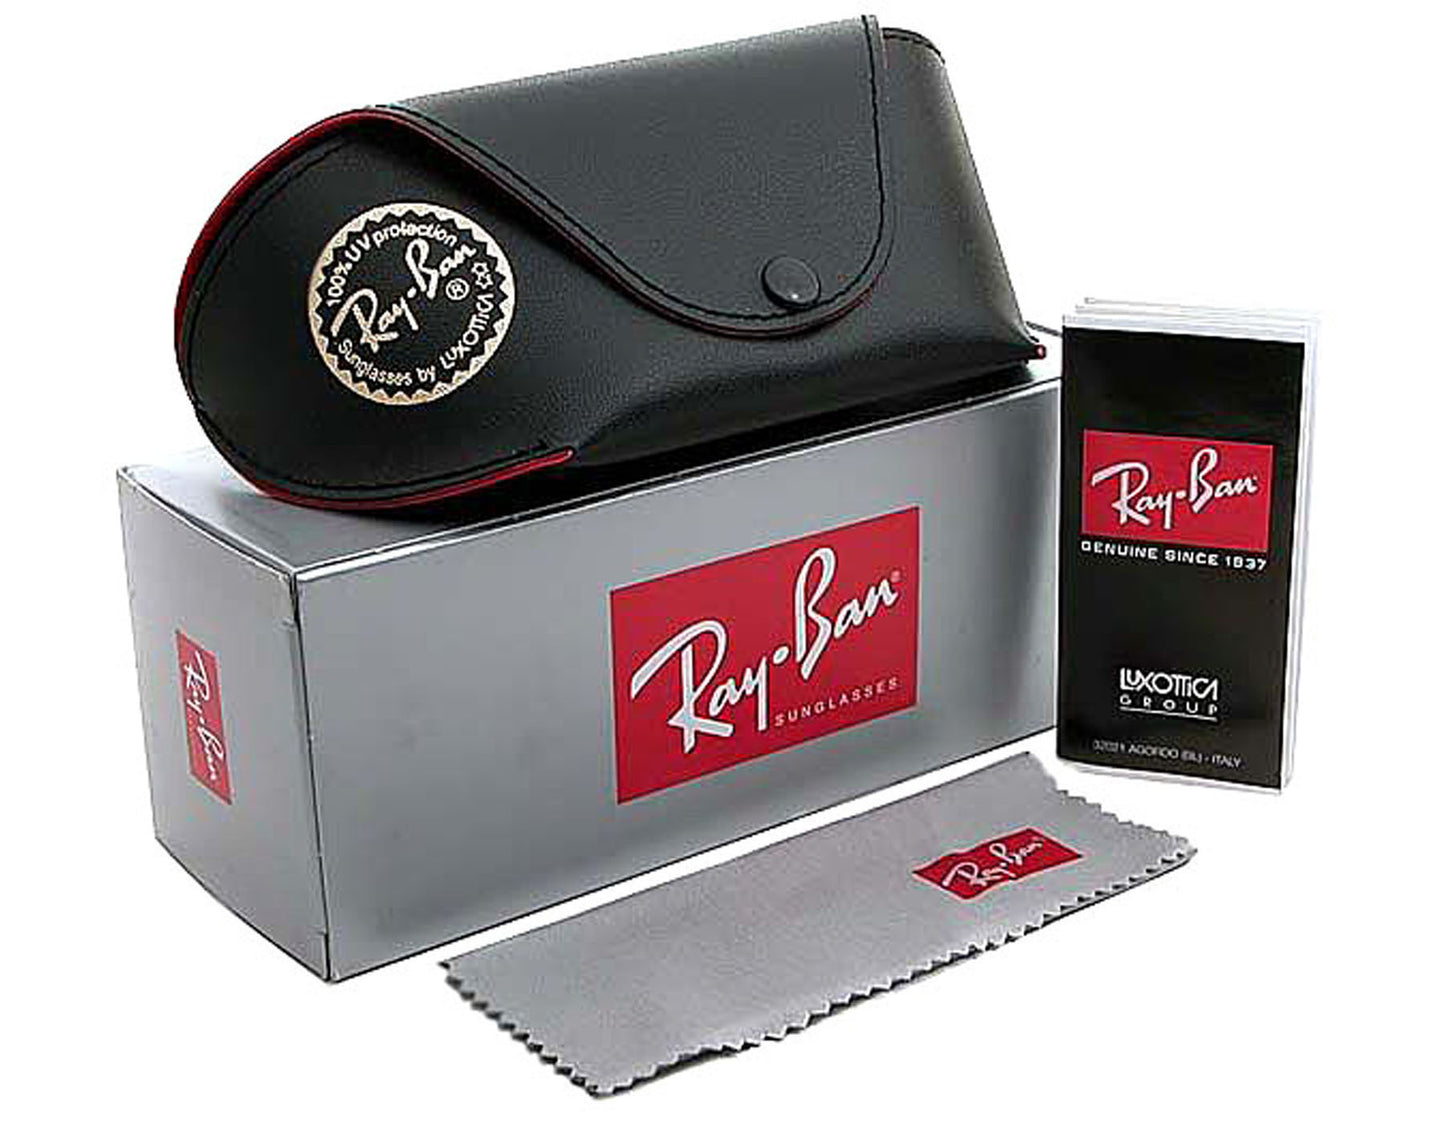 Ray Ban RX5390-2034-52 52mm New Eyeglasses